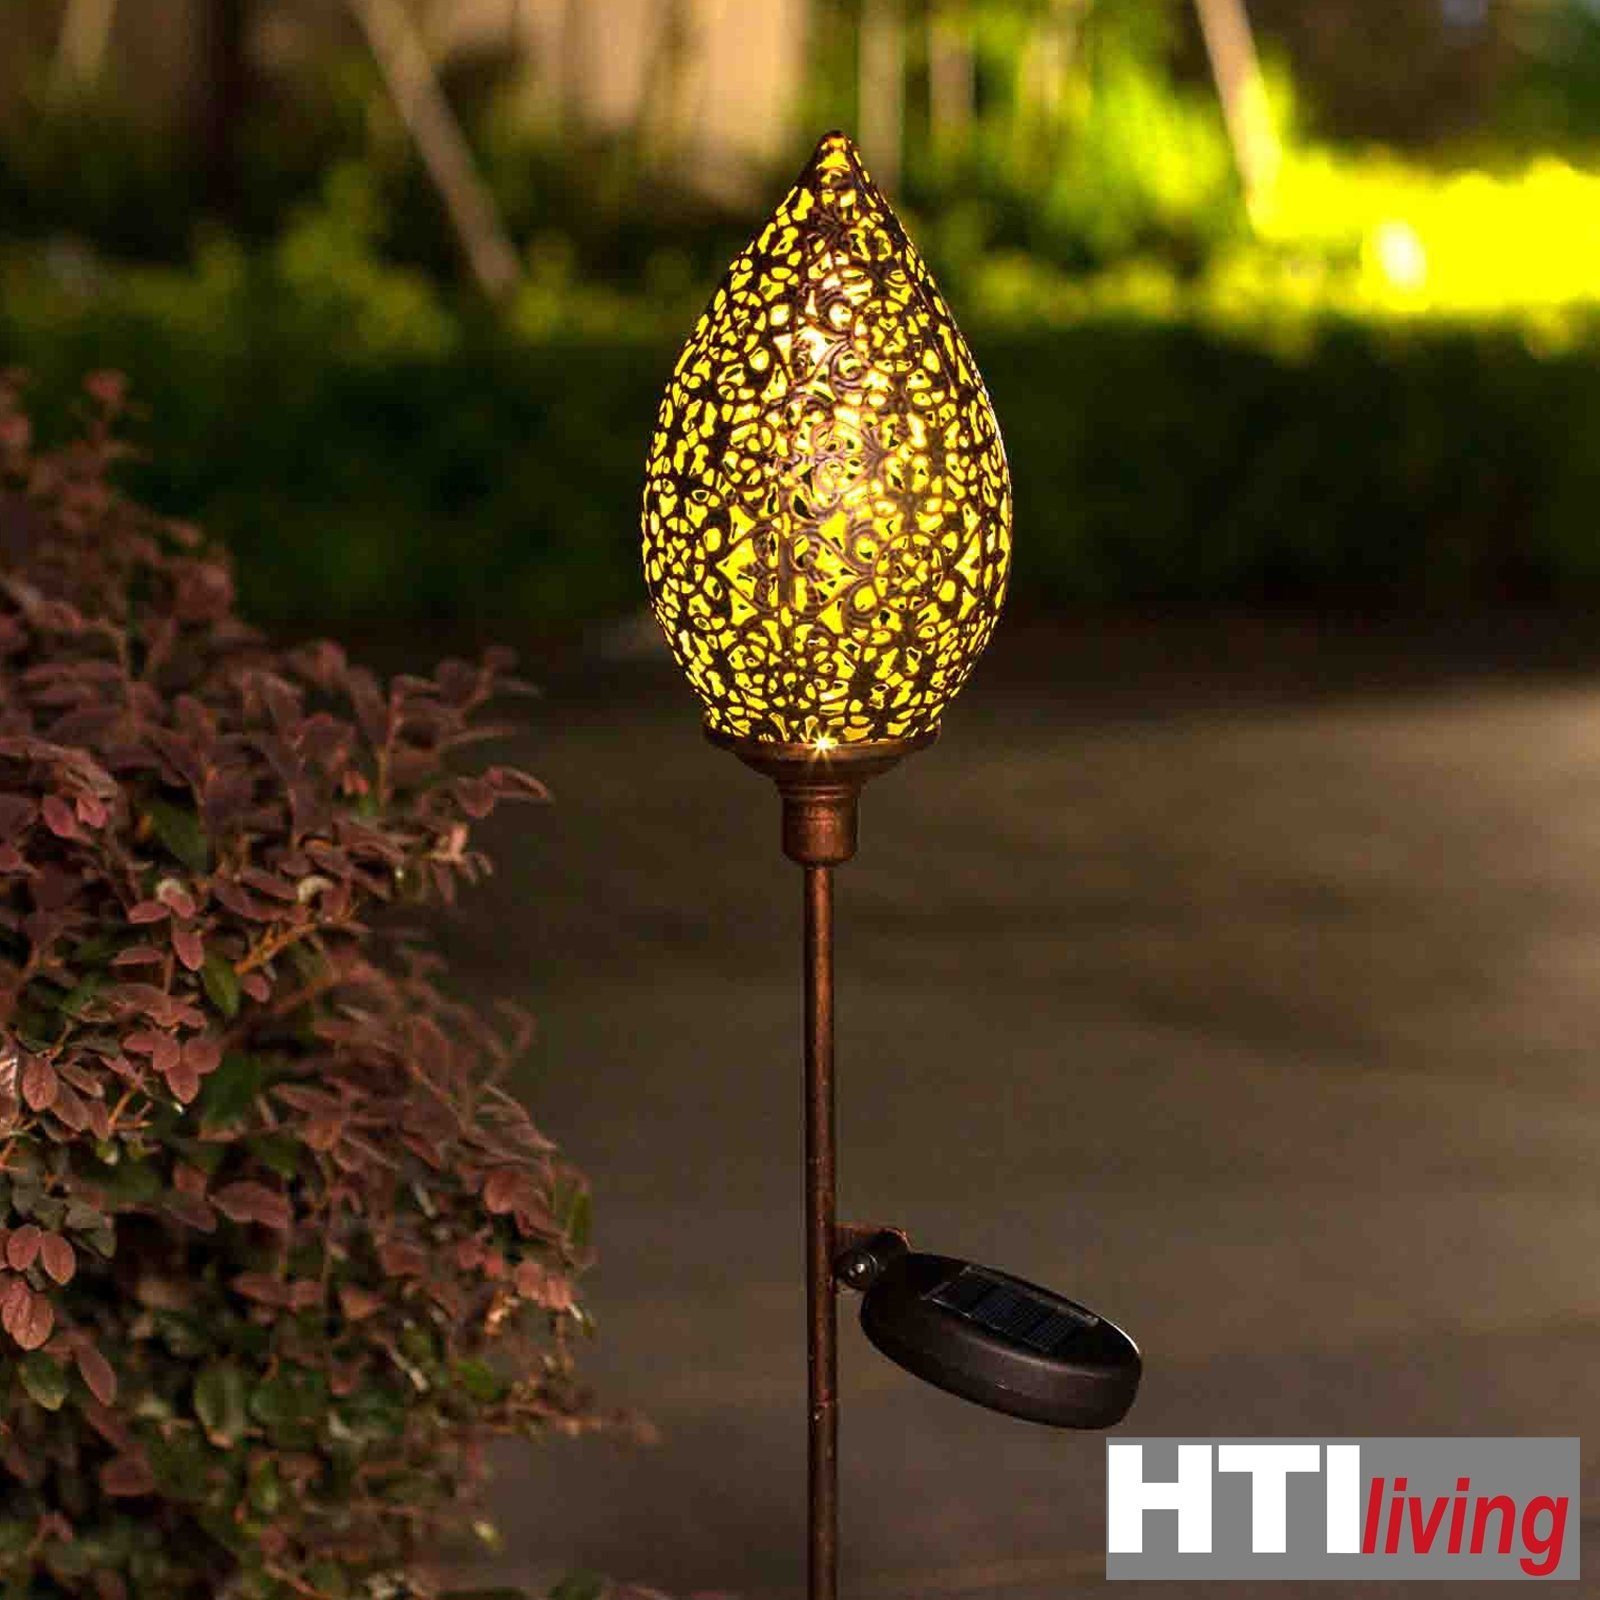 Solarlampe HTI-Living Set LED Solarstecker Gartenleuchte Soley, Solarleuchte Knospe 2er